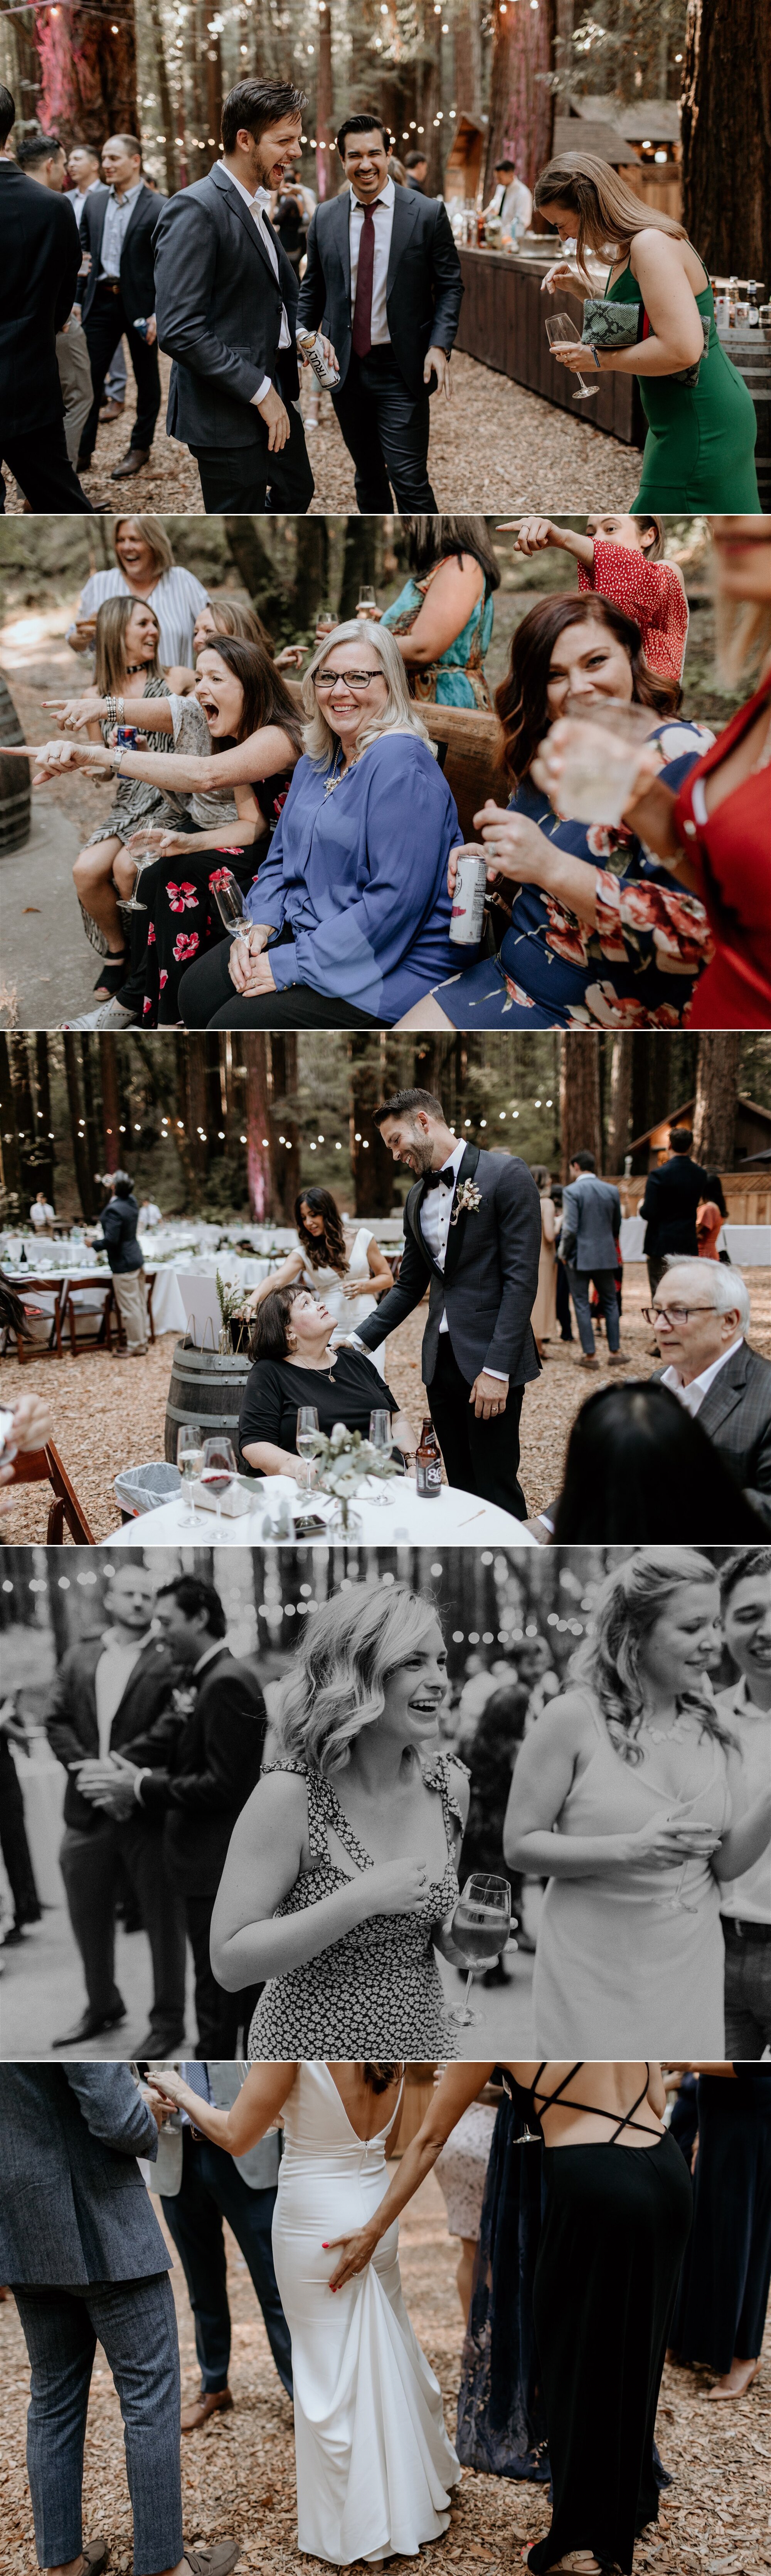 Gretchen Gause Photography // Chenoweth Woods Wedding, Sebastopol #chenowethwoodswedding #chenowethwoodsweddingphotograpehr #sebastopolweddingphotographer 